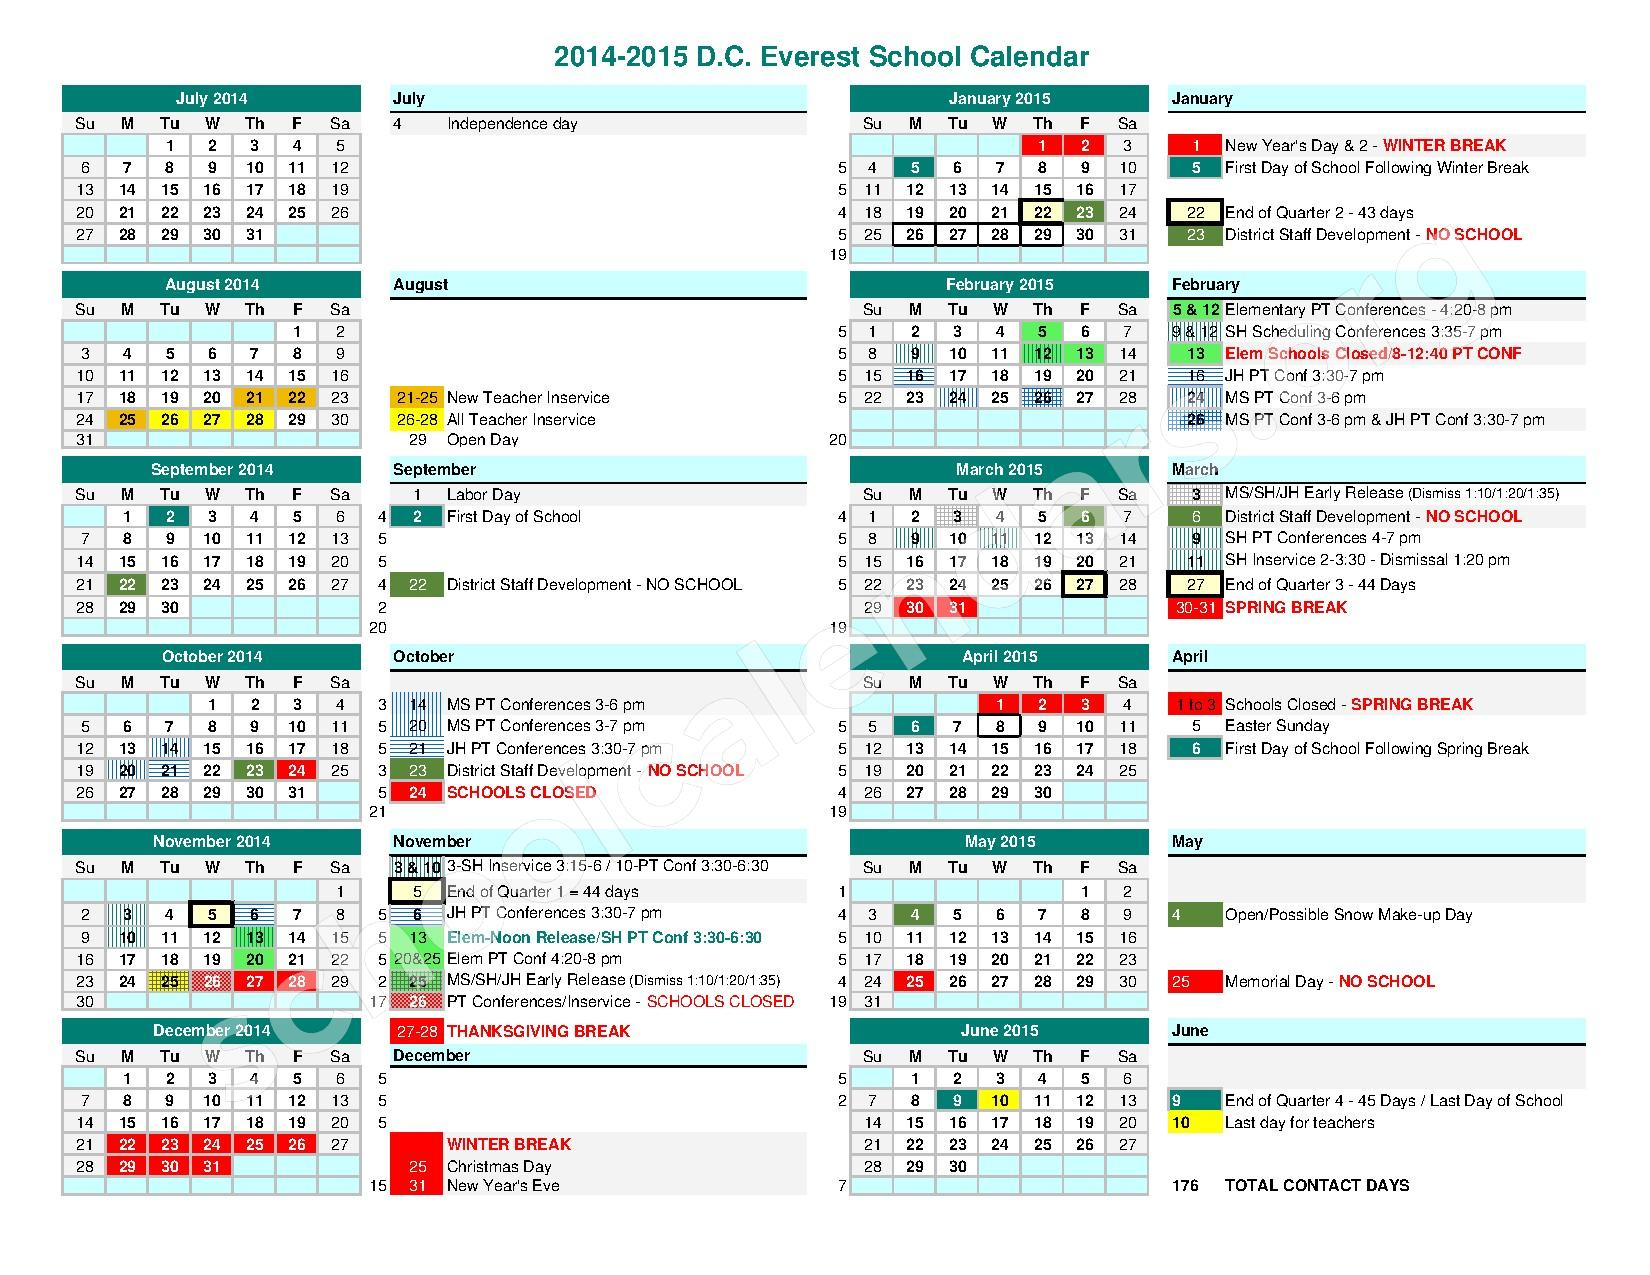 dc-everest-school-district-calendar-2023-schoolcalendars